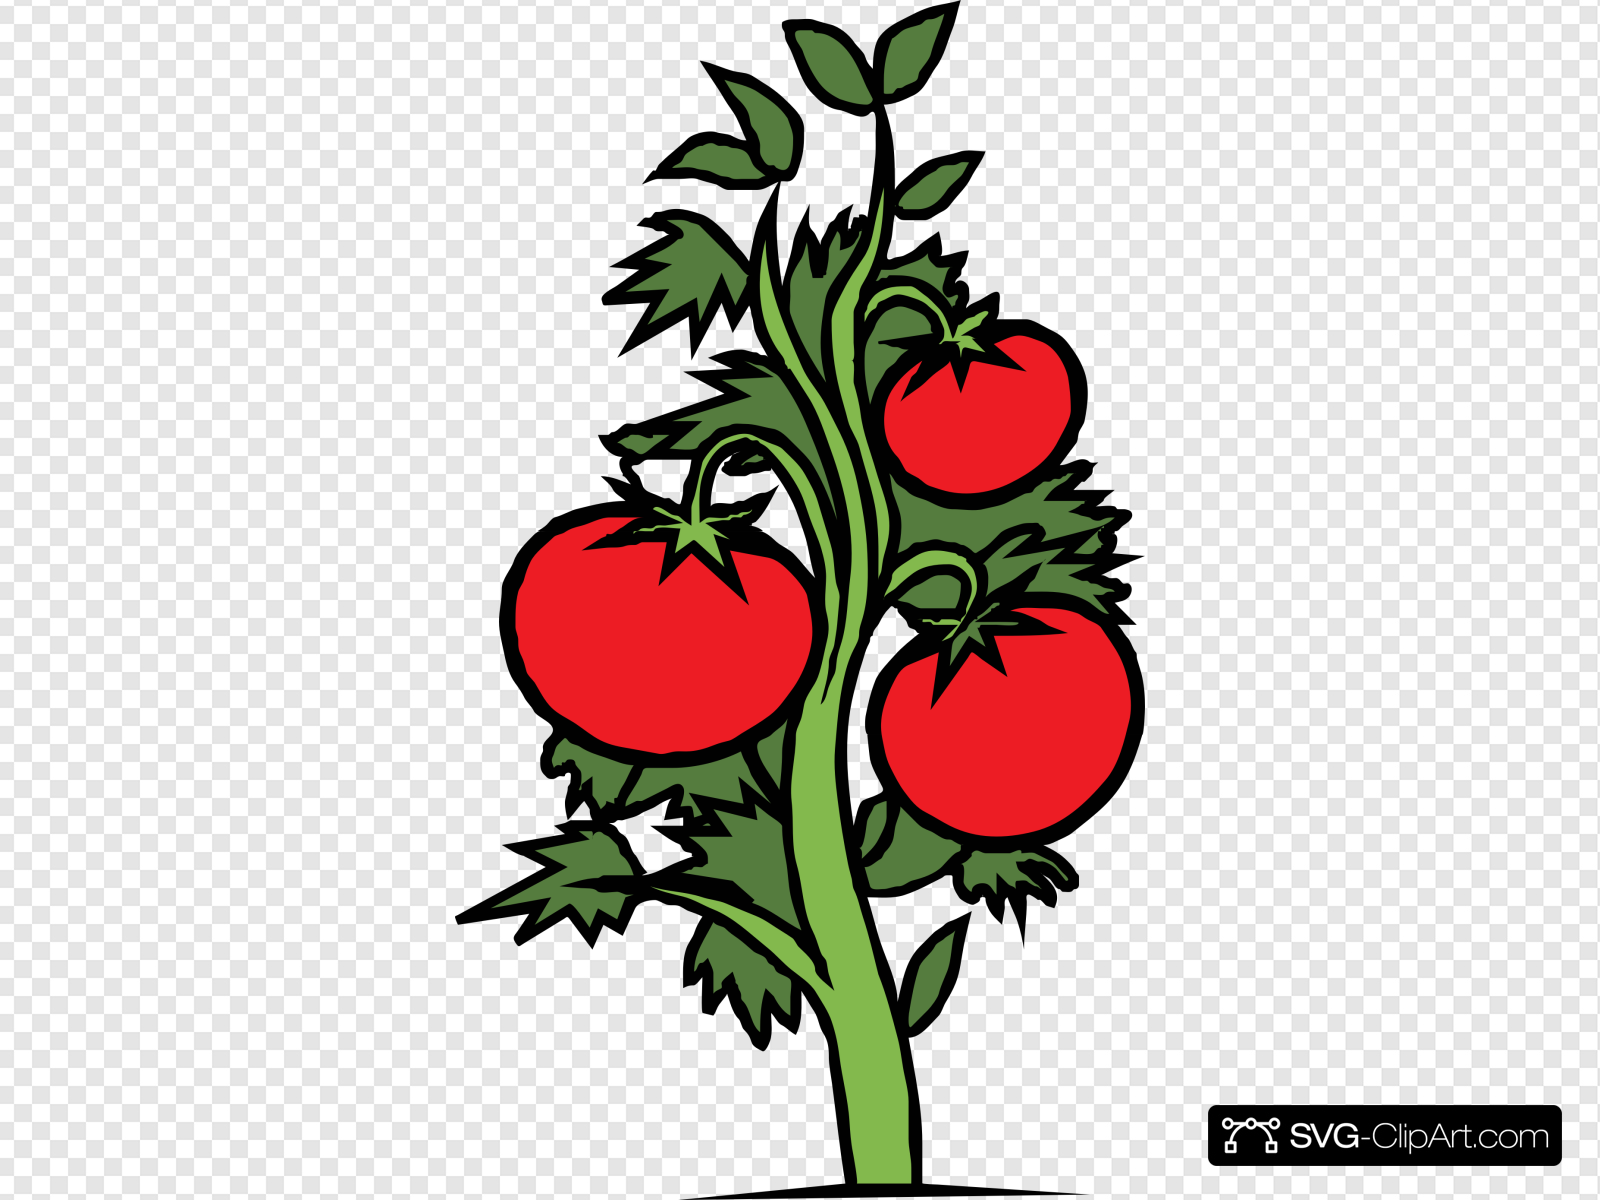 tomatoes clipart tomato tree